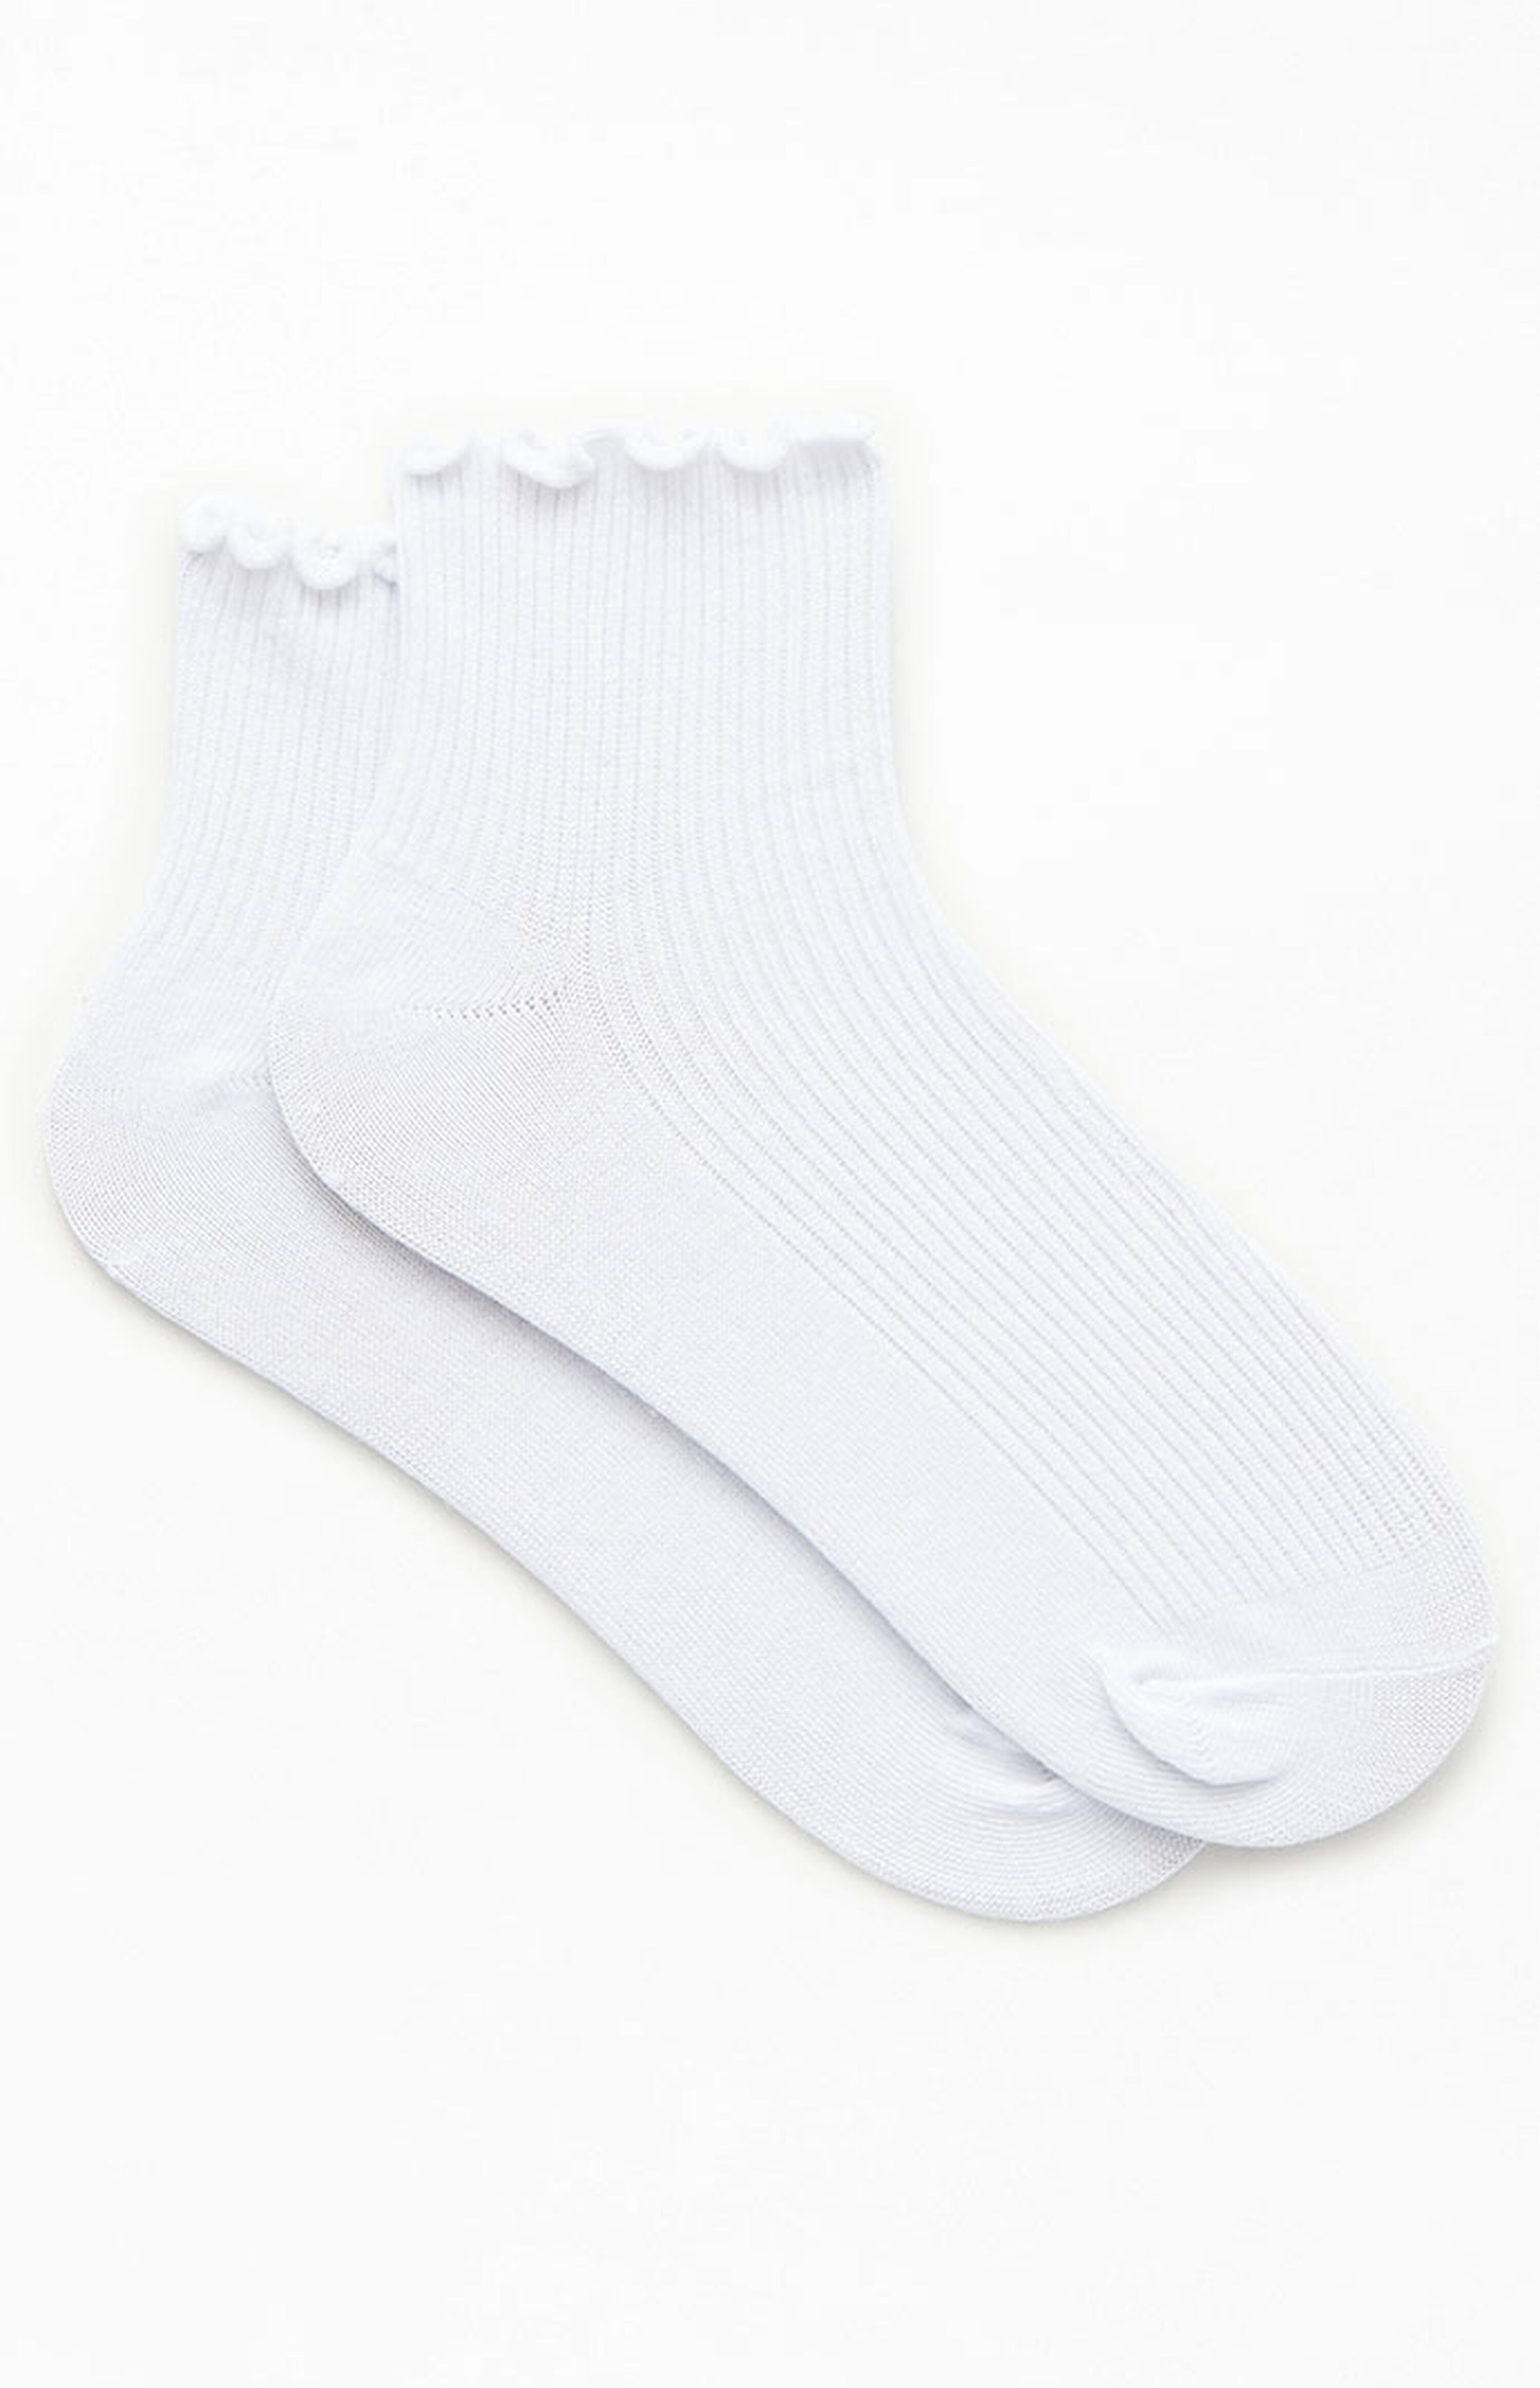 PacSun Ruffle Ankle Socks | PacSun